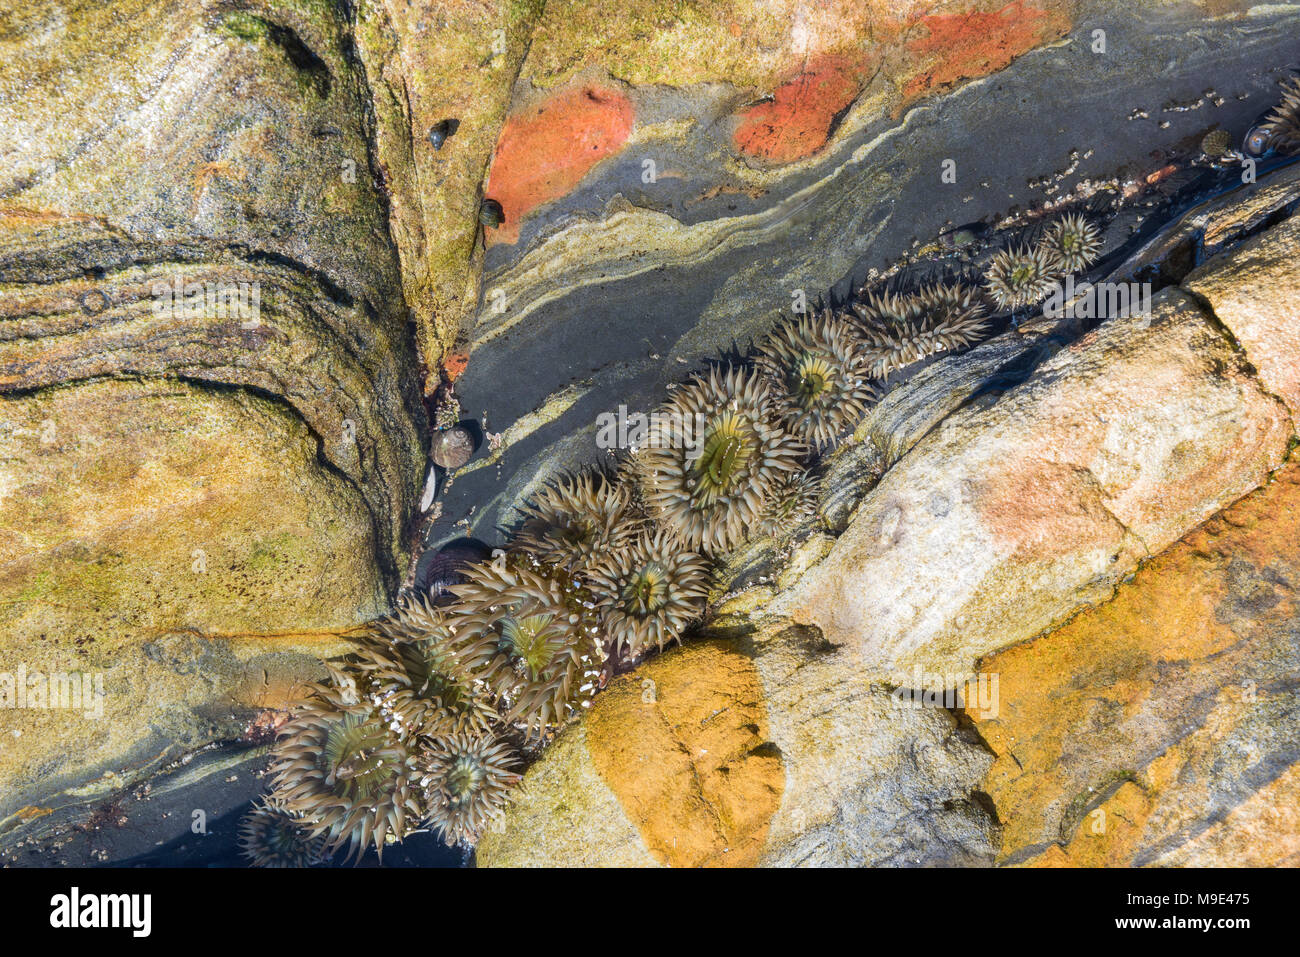 Starburst Anemonen (Anthopleura sola), tide pool, Pt Lobos State Preserve, CA, USA, von Dominique Braud/Dembinsky Foto Assoc Stockfoto